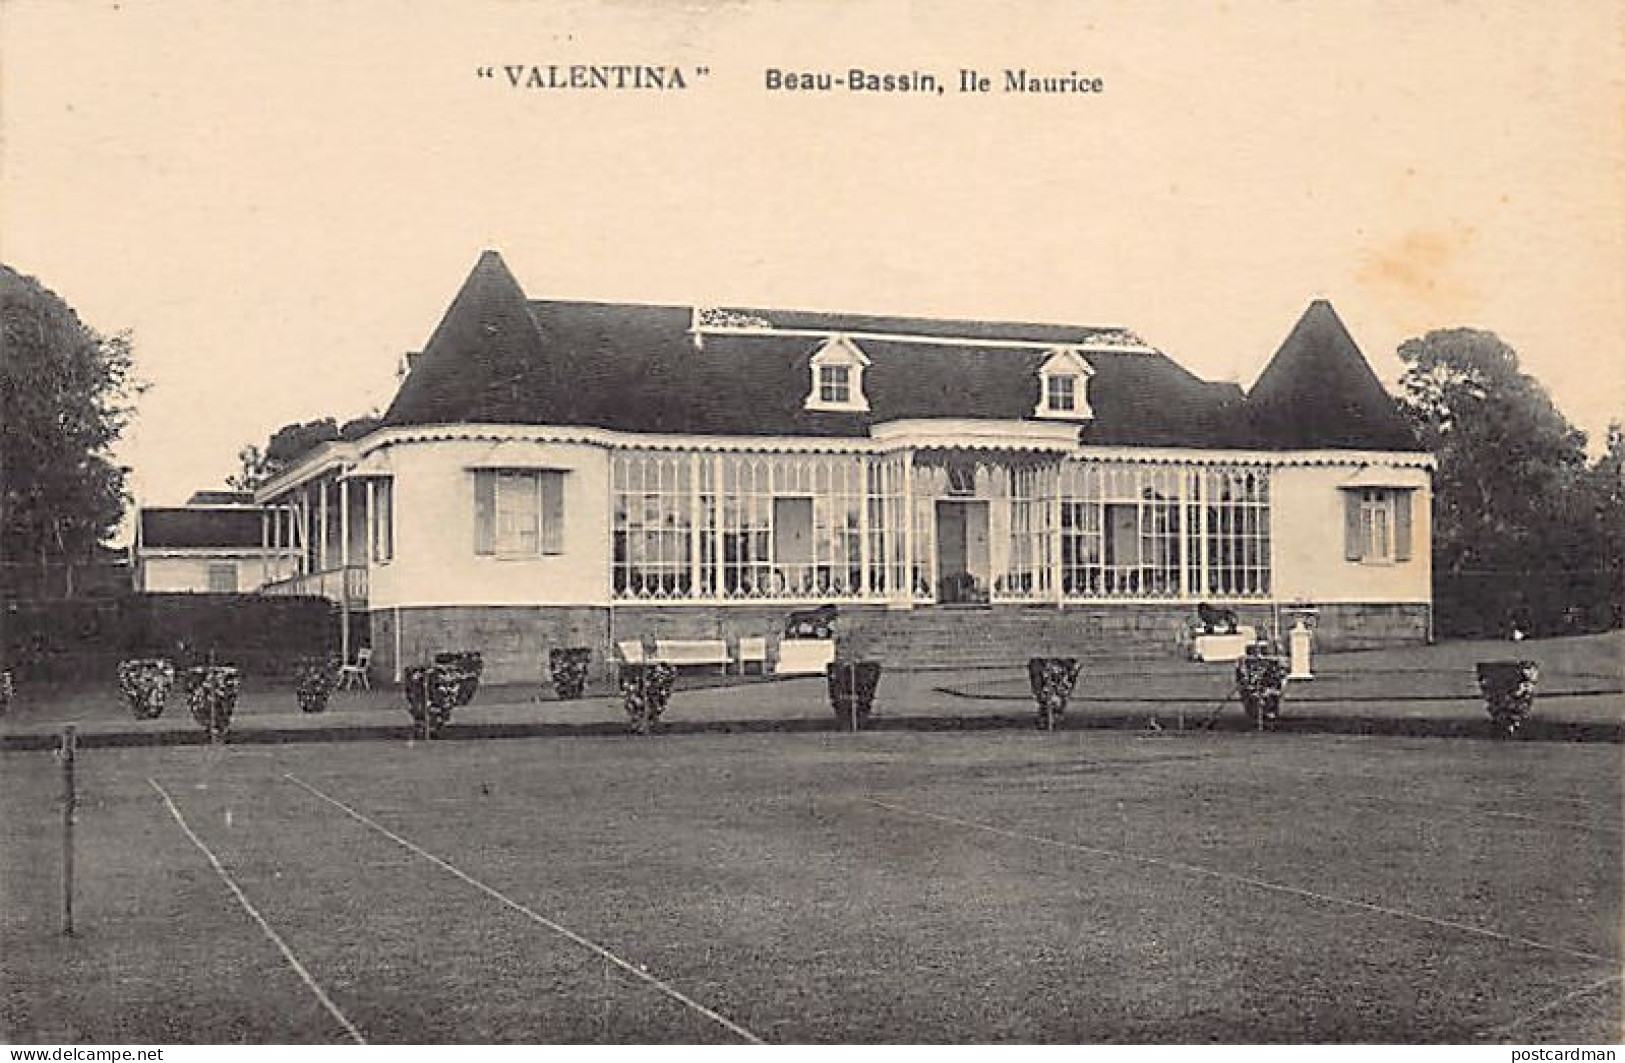 Mauritius - BEAU-BASSIN - Valentina 2 - Publ. Unis France. - Maurice